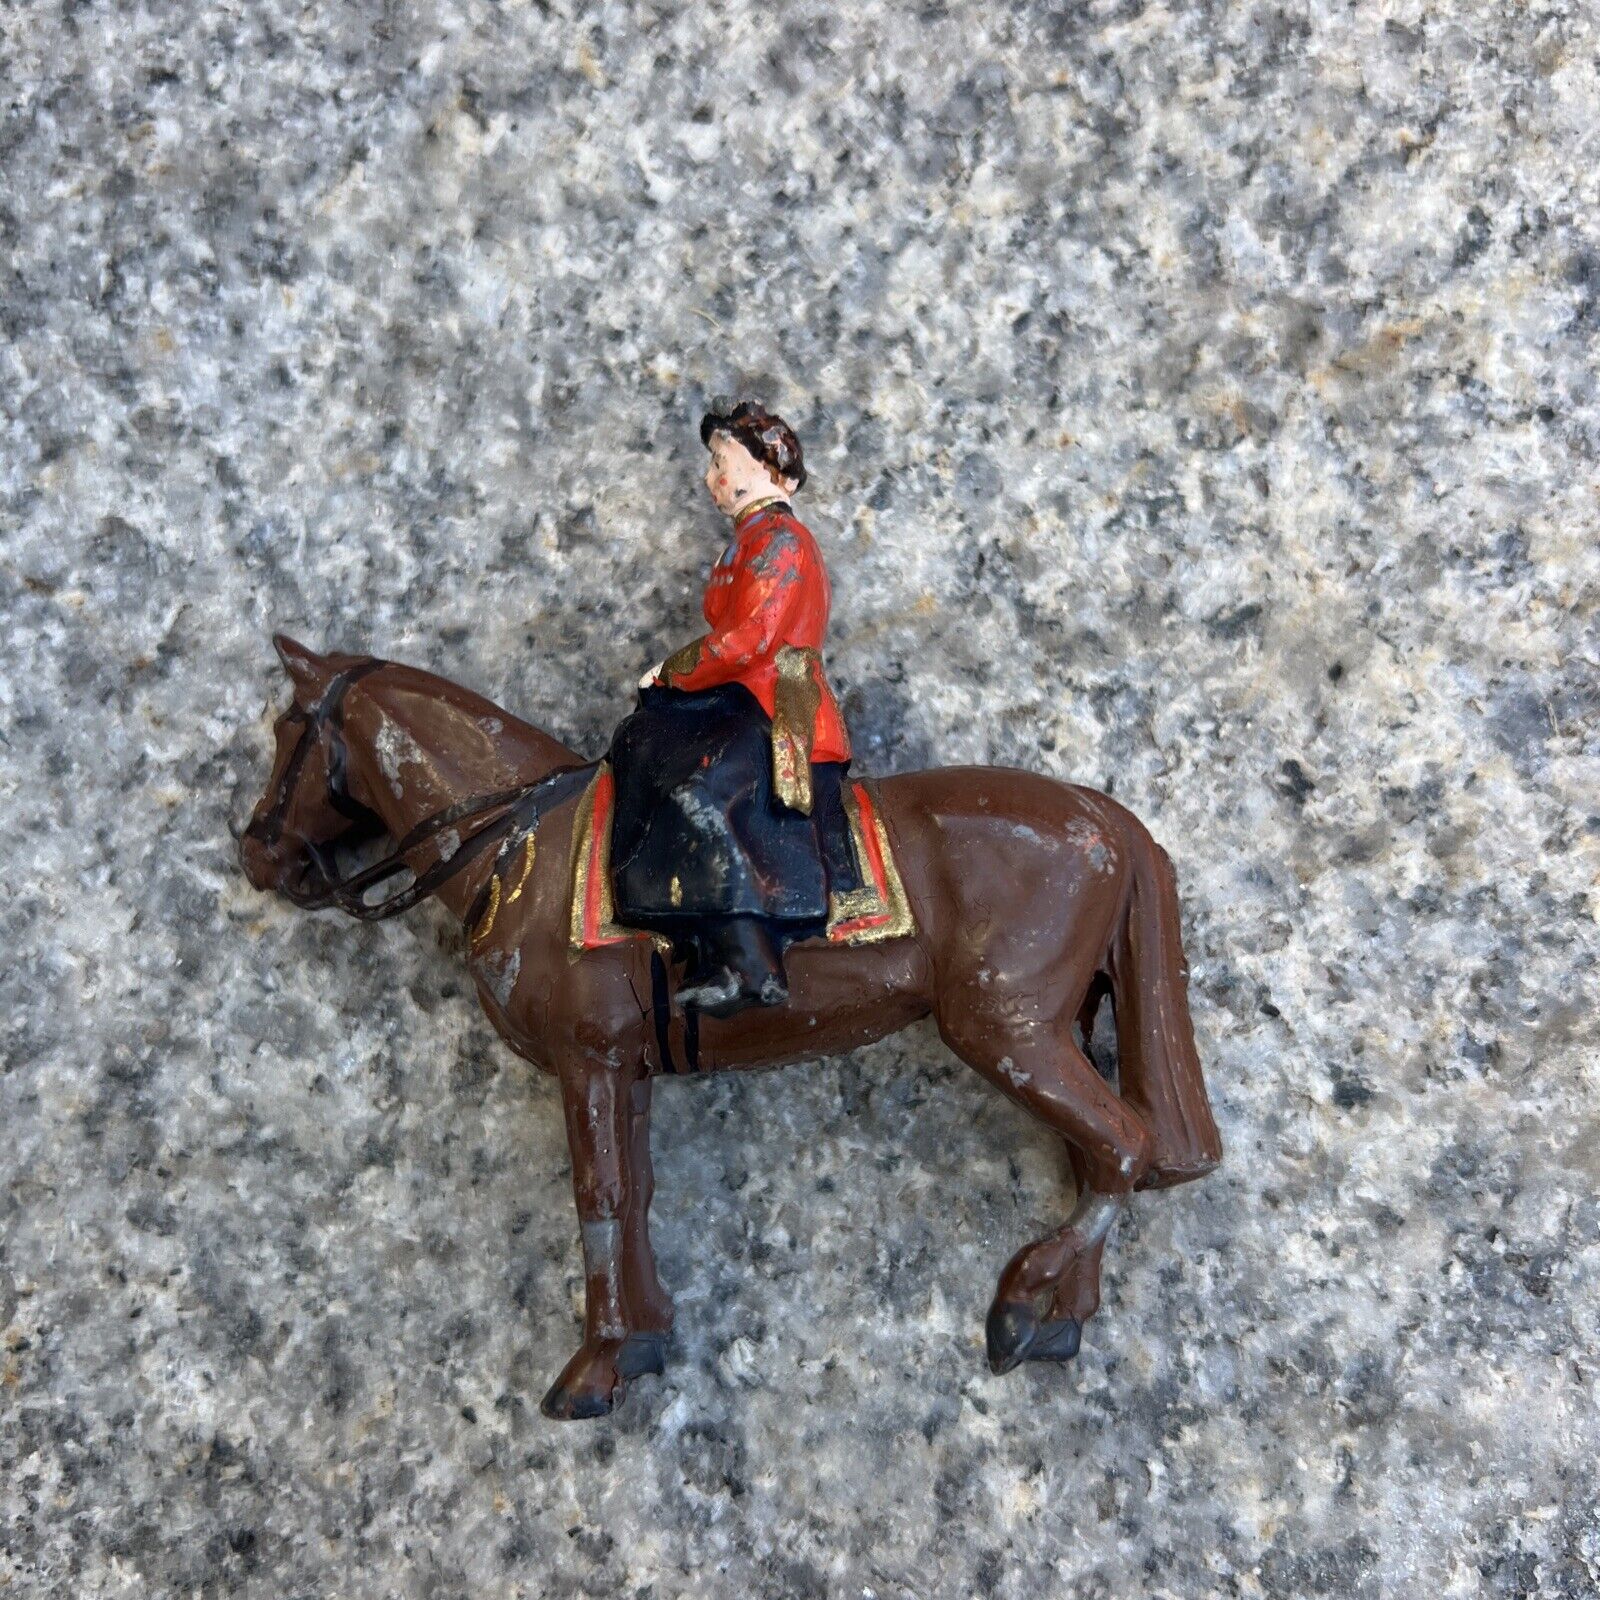 Britain LTD Queen Elizabeth II horse figurine. Missing One Arm/Feather On Hat